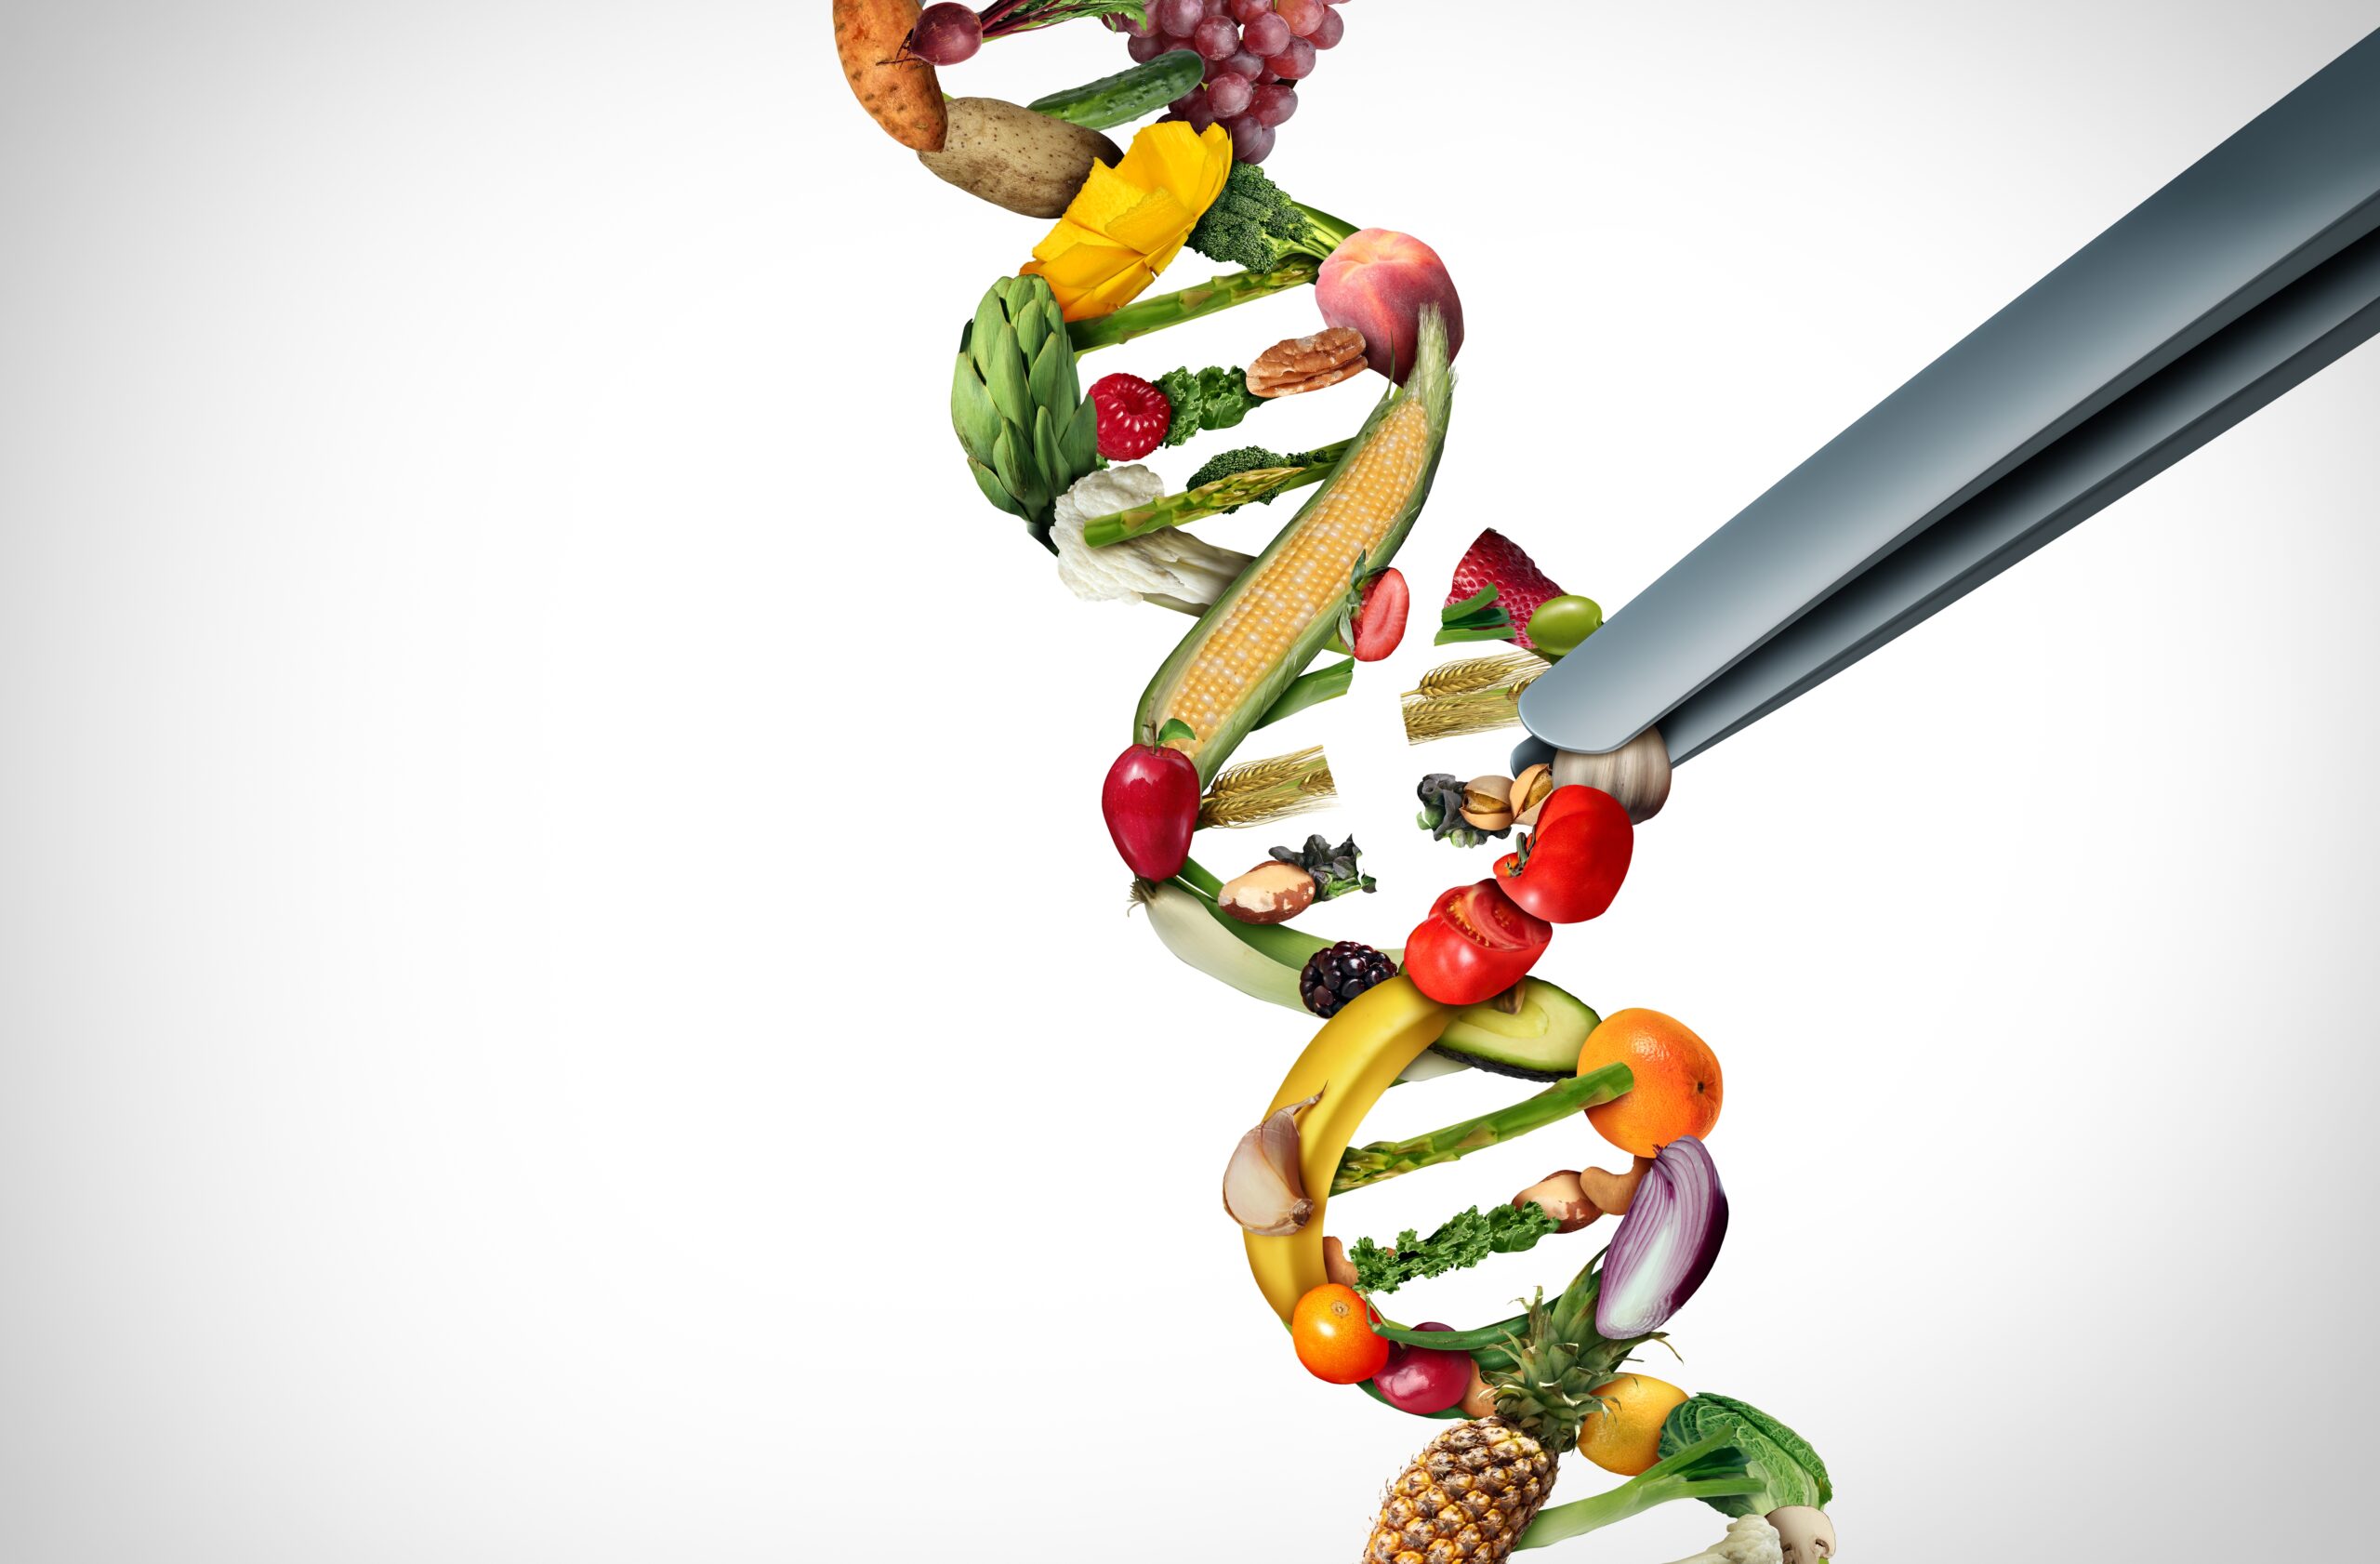 Genome edited foods